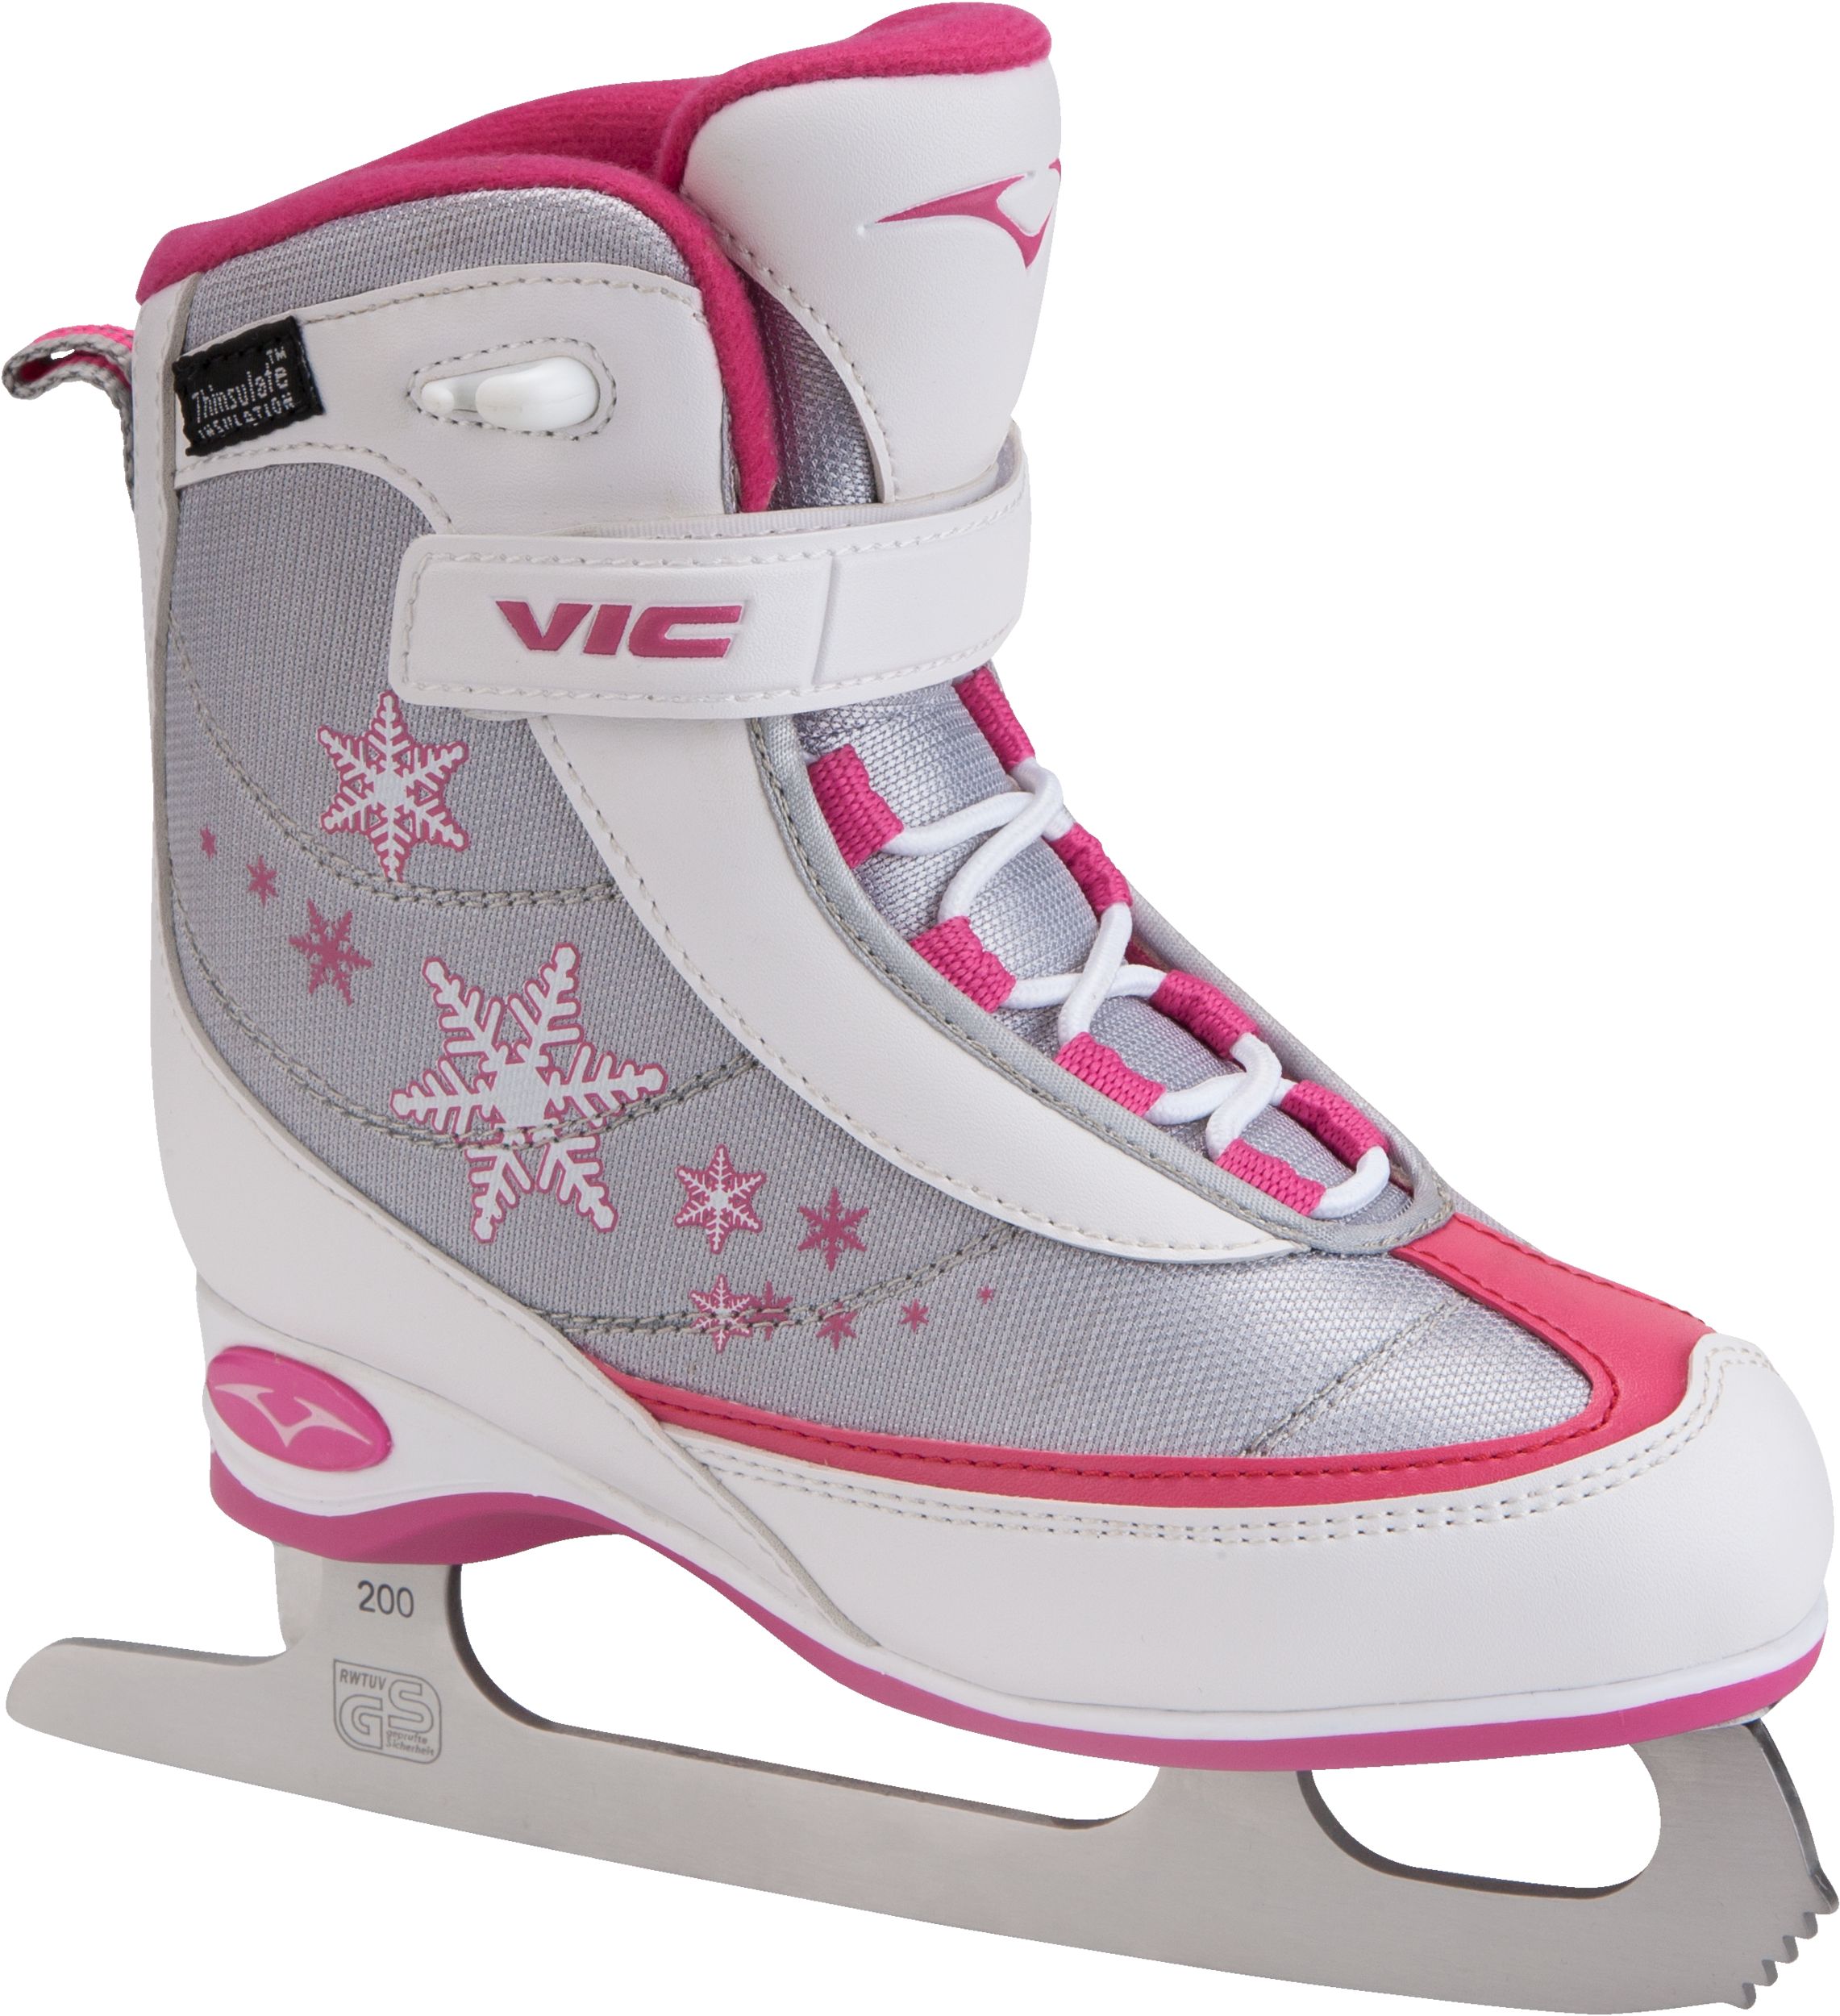 Vic Girls' Shimmer Ice Skates